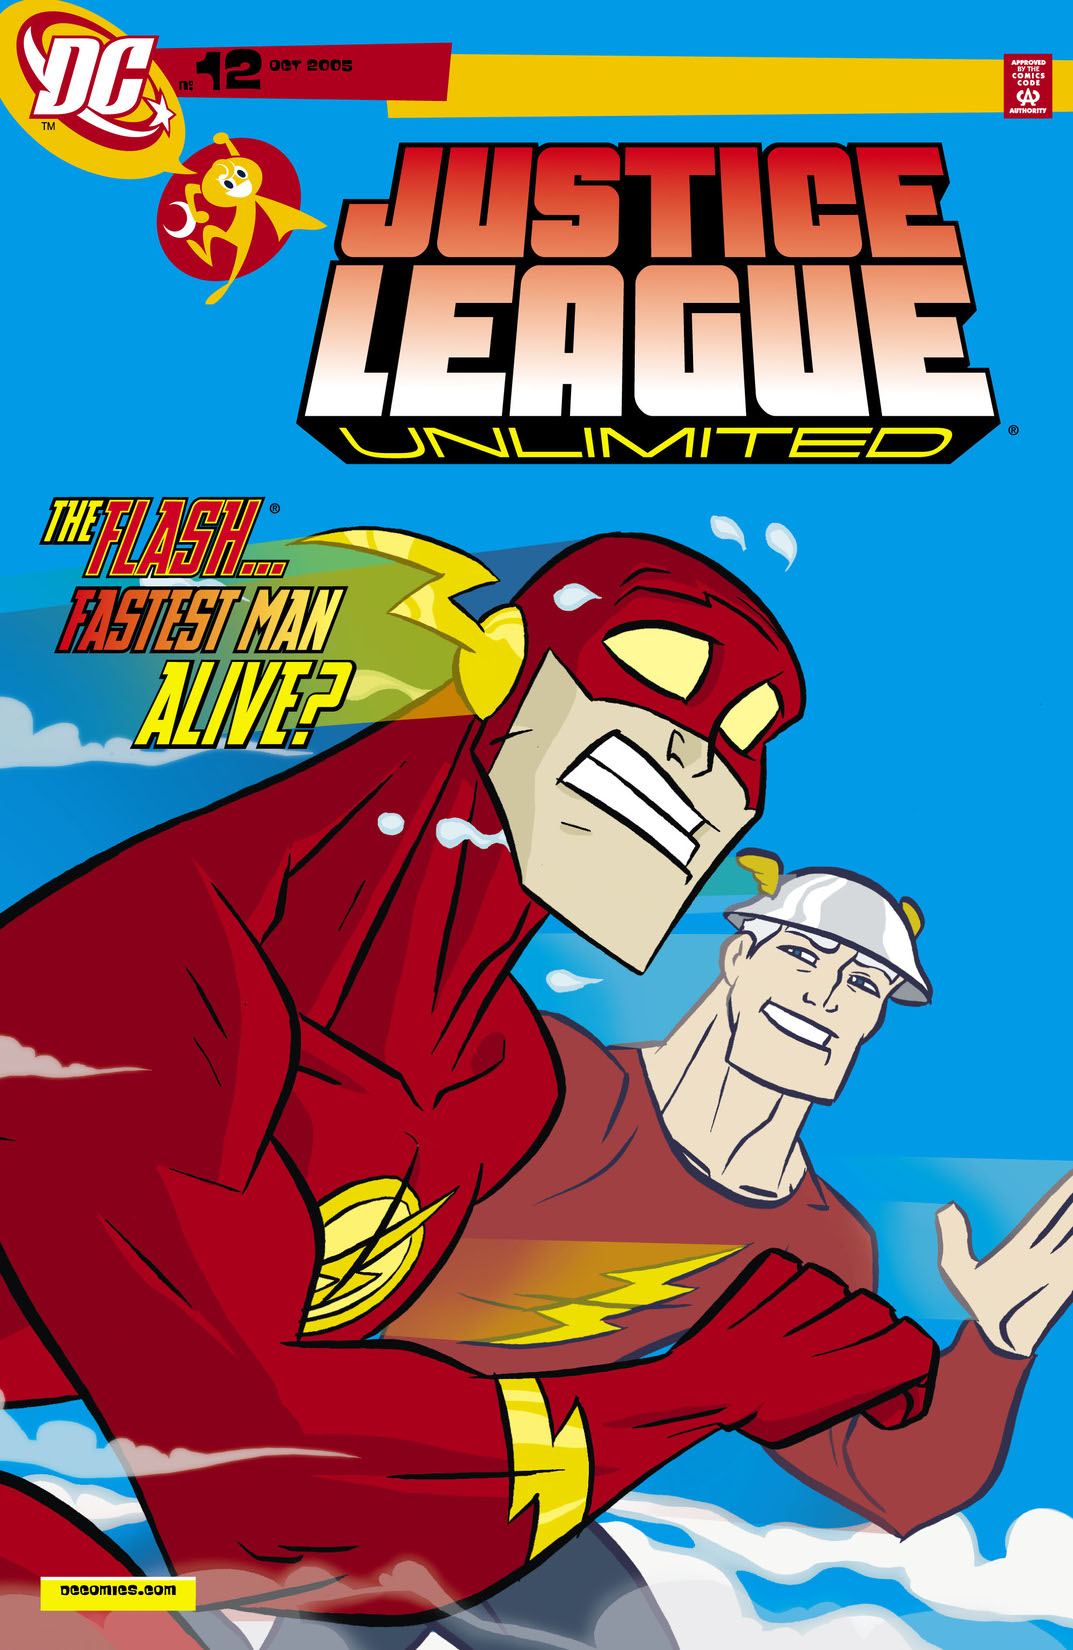 Justice League Unlimited #12 preview images